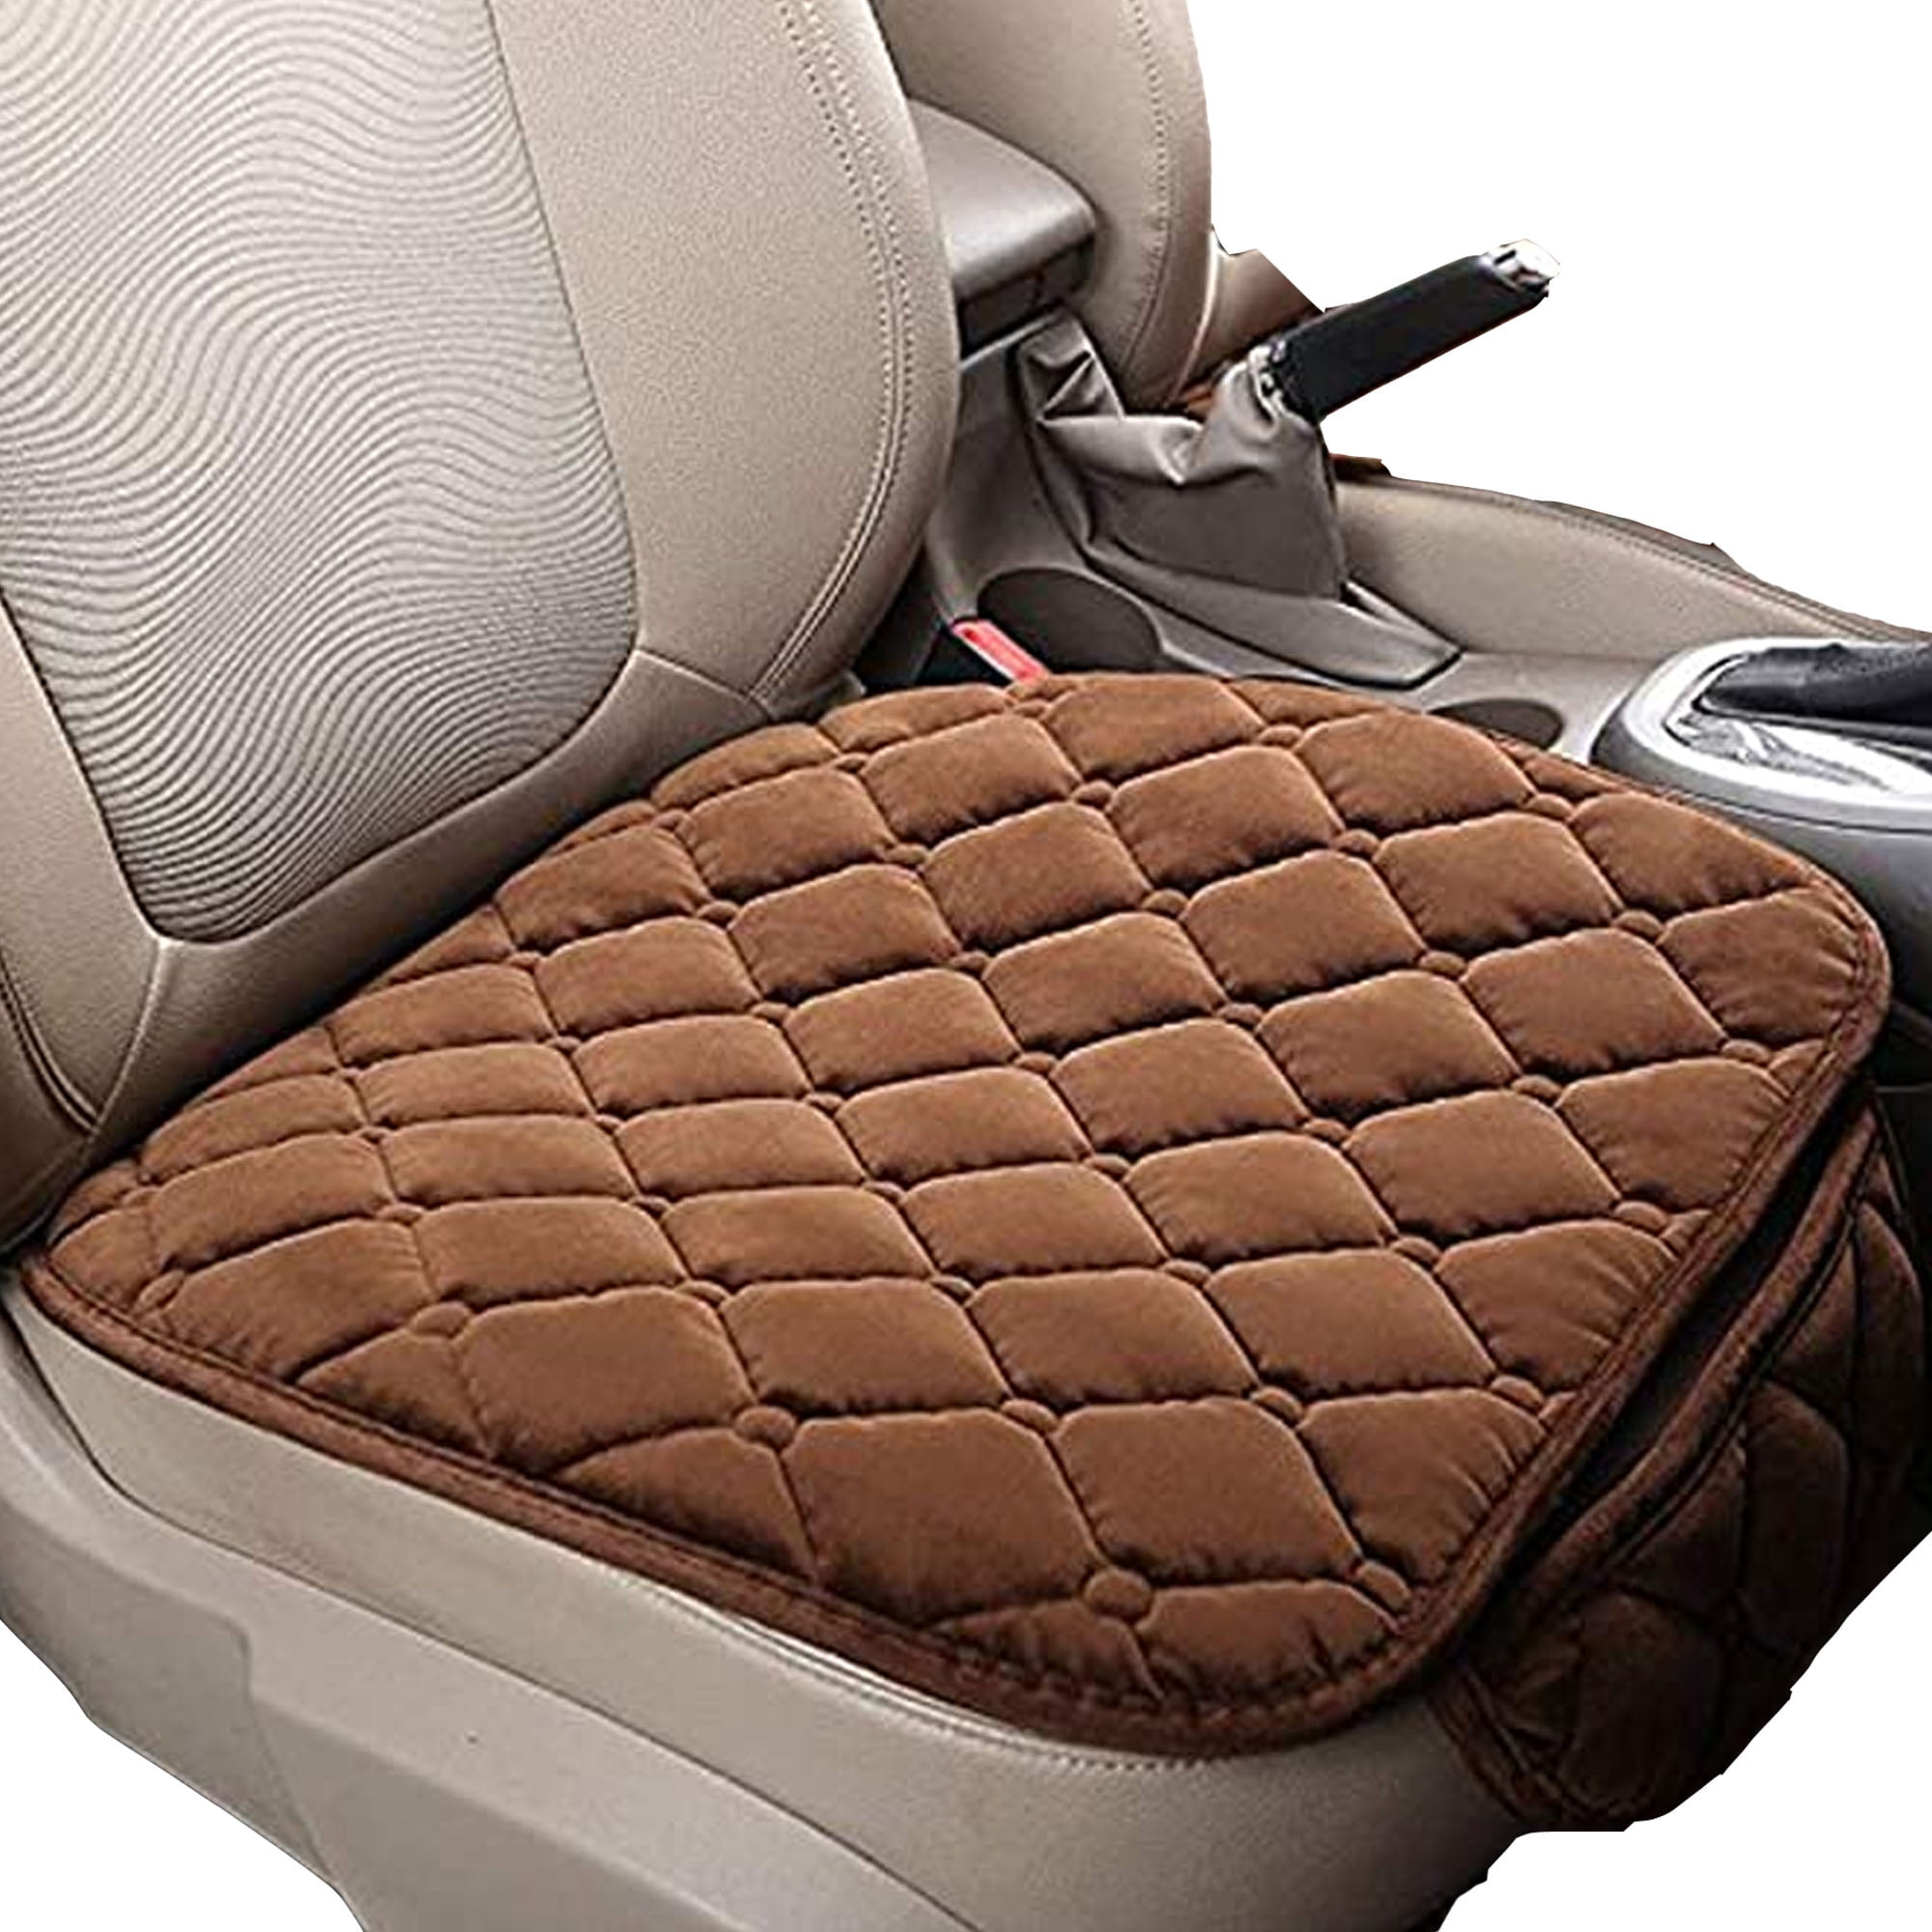 Car Accessory Seat Cover Universal Coffee Color Pure Leather Auto